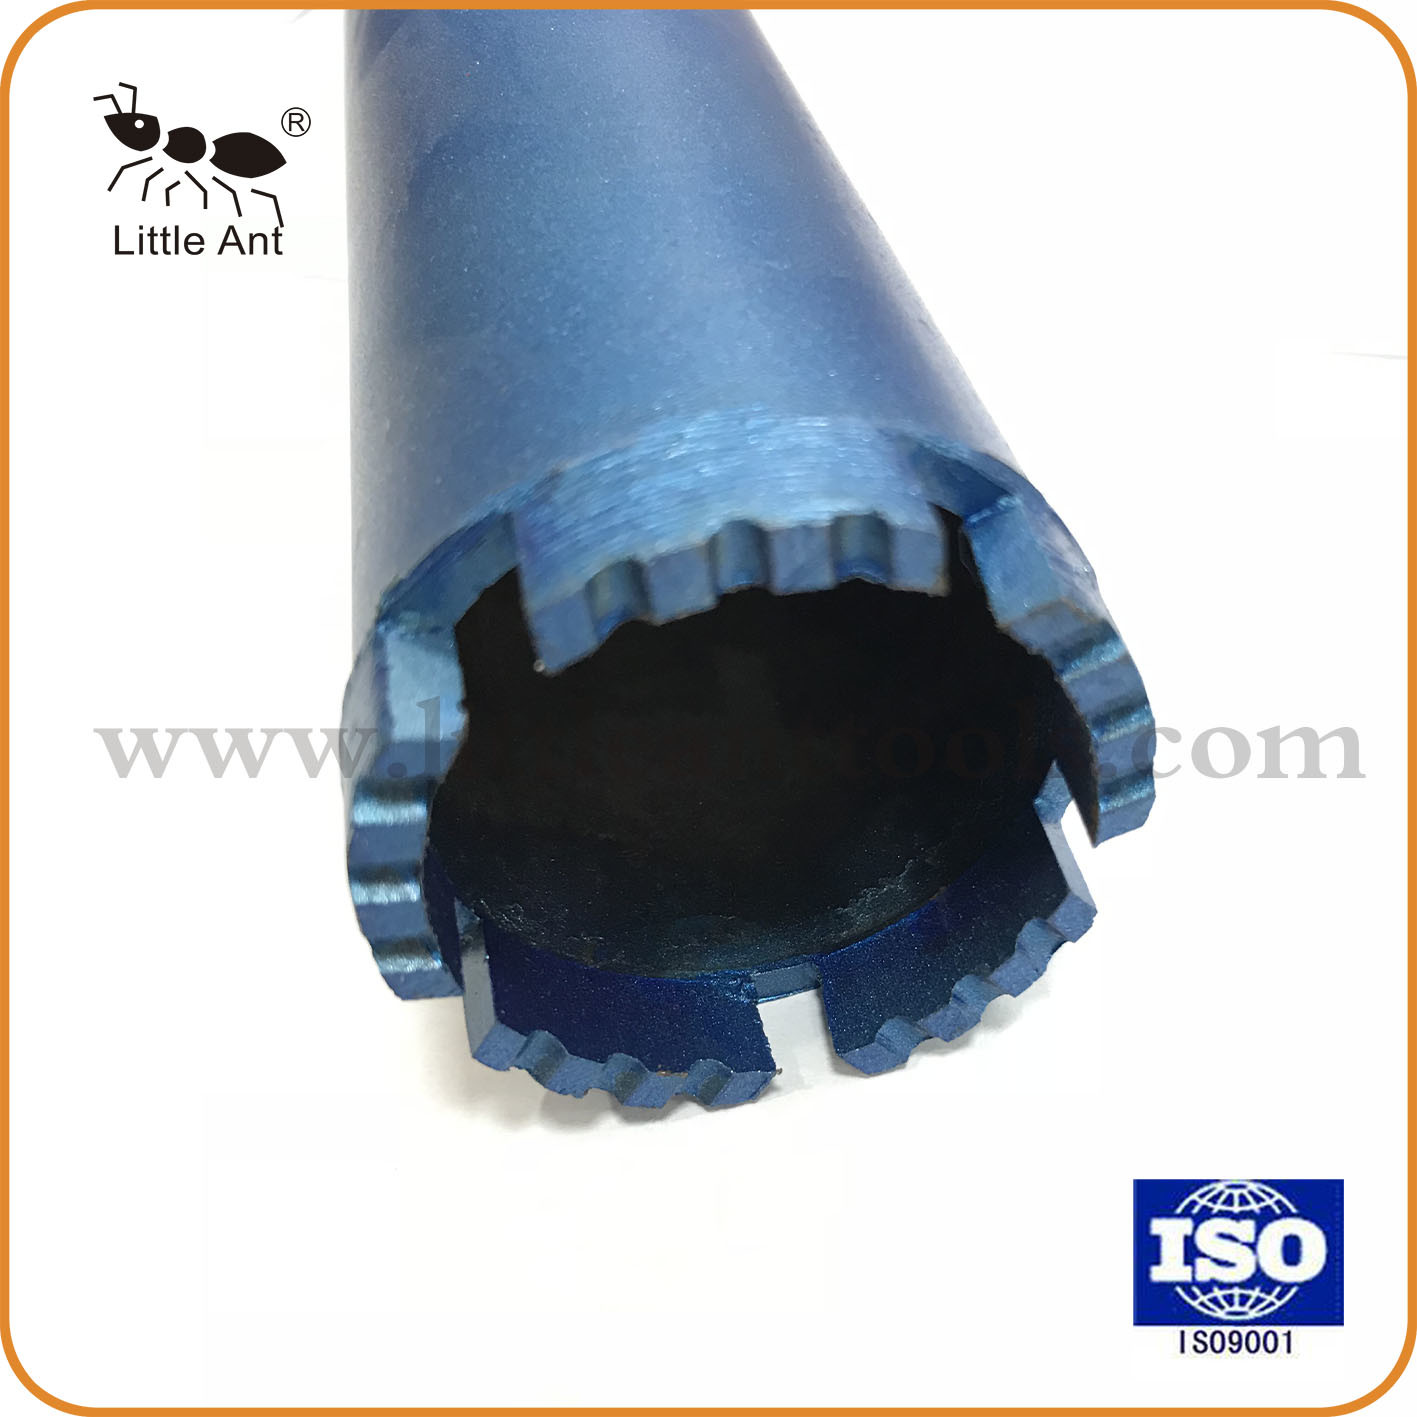 350 mm/ 370 mm Little Ant Dry Diamond Core Drill Bit for Reinforced Concrete.